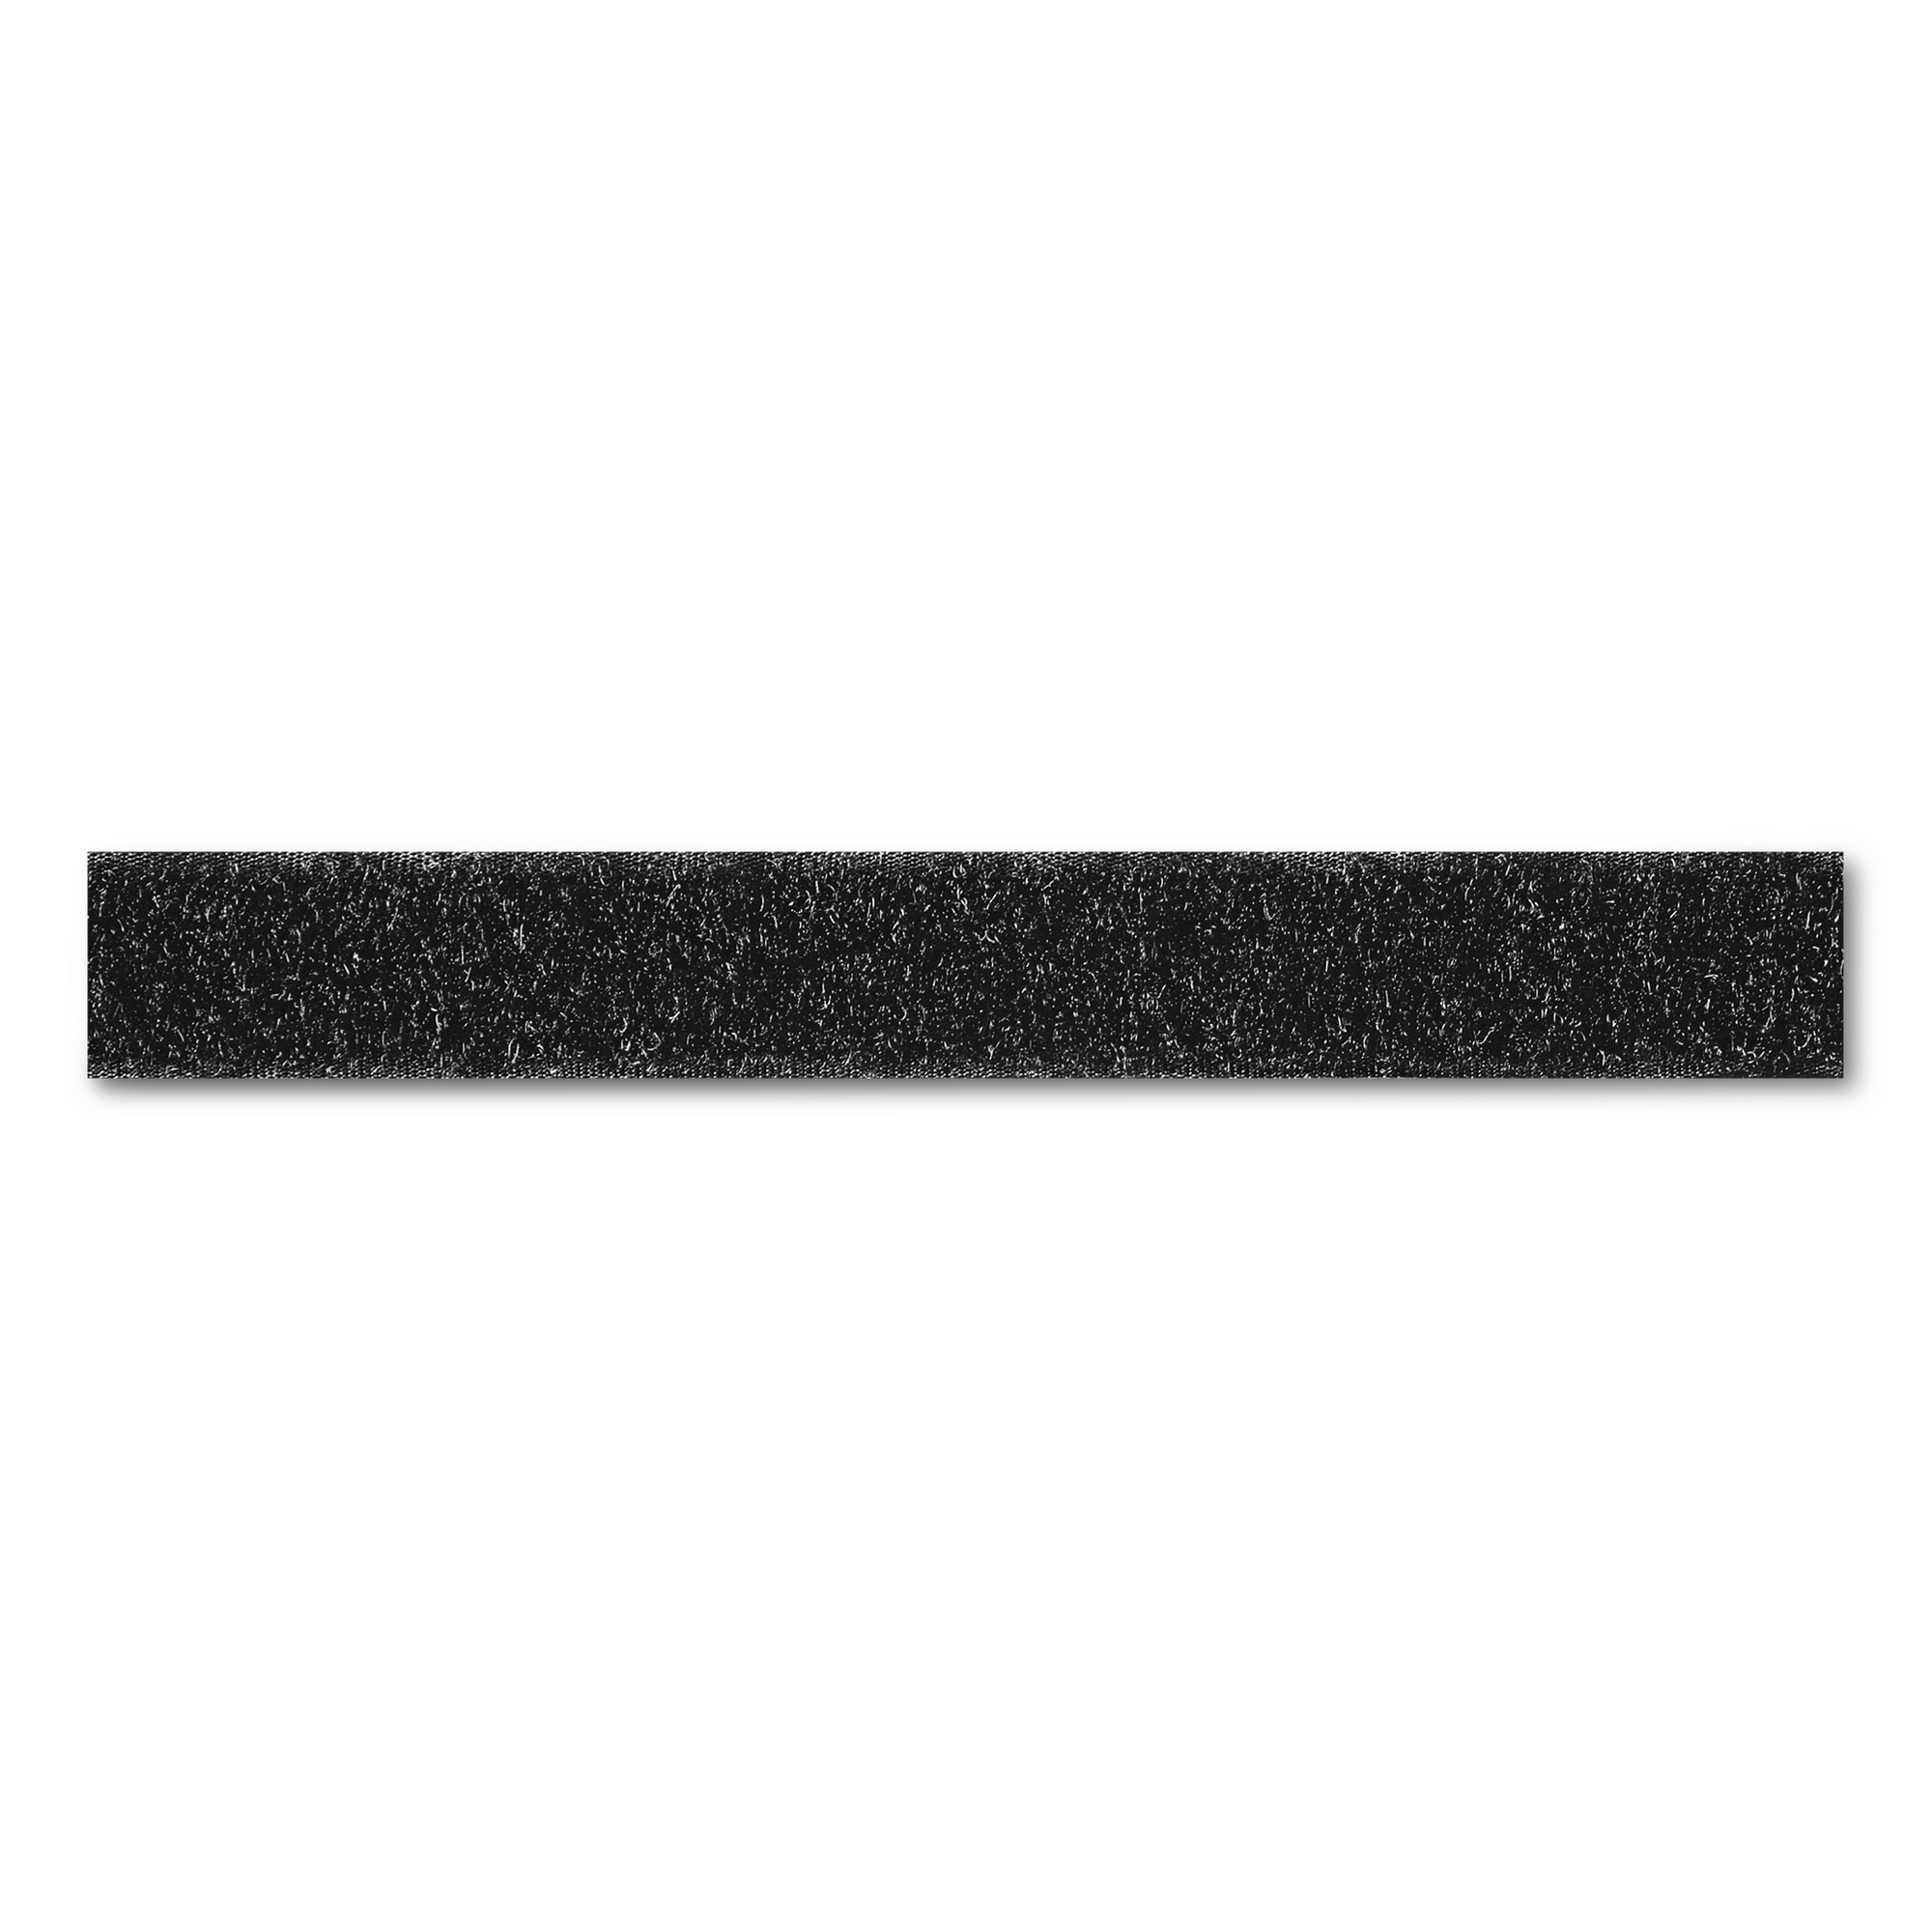 Flauschband selbstklebend schwarz 20 mm x 35 m + product picture